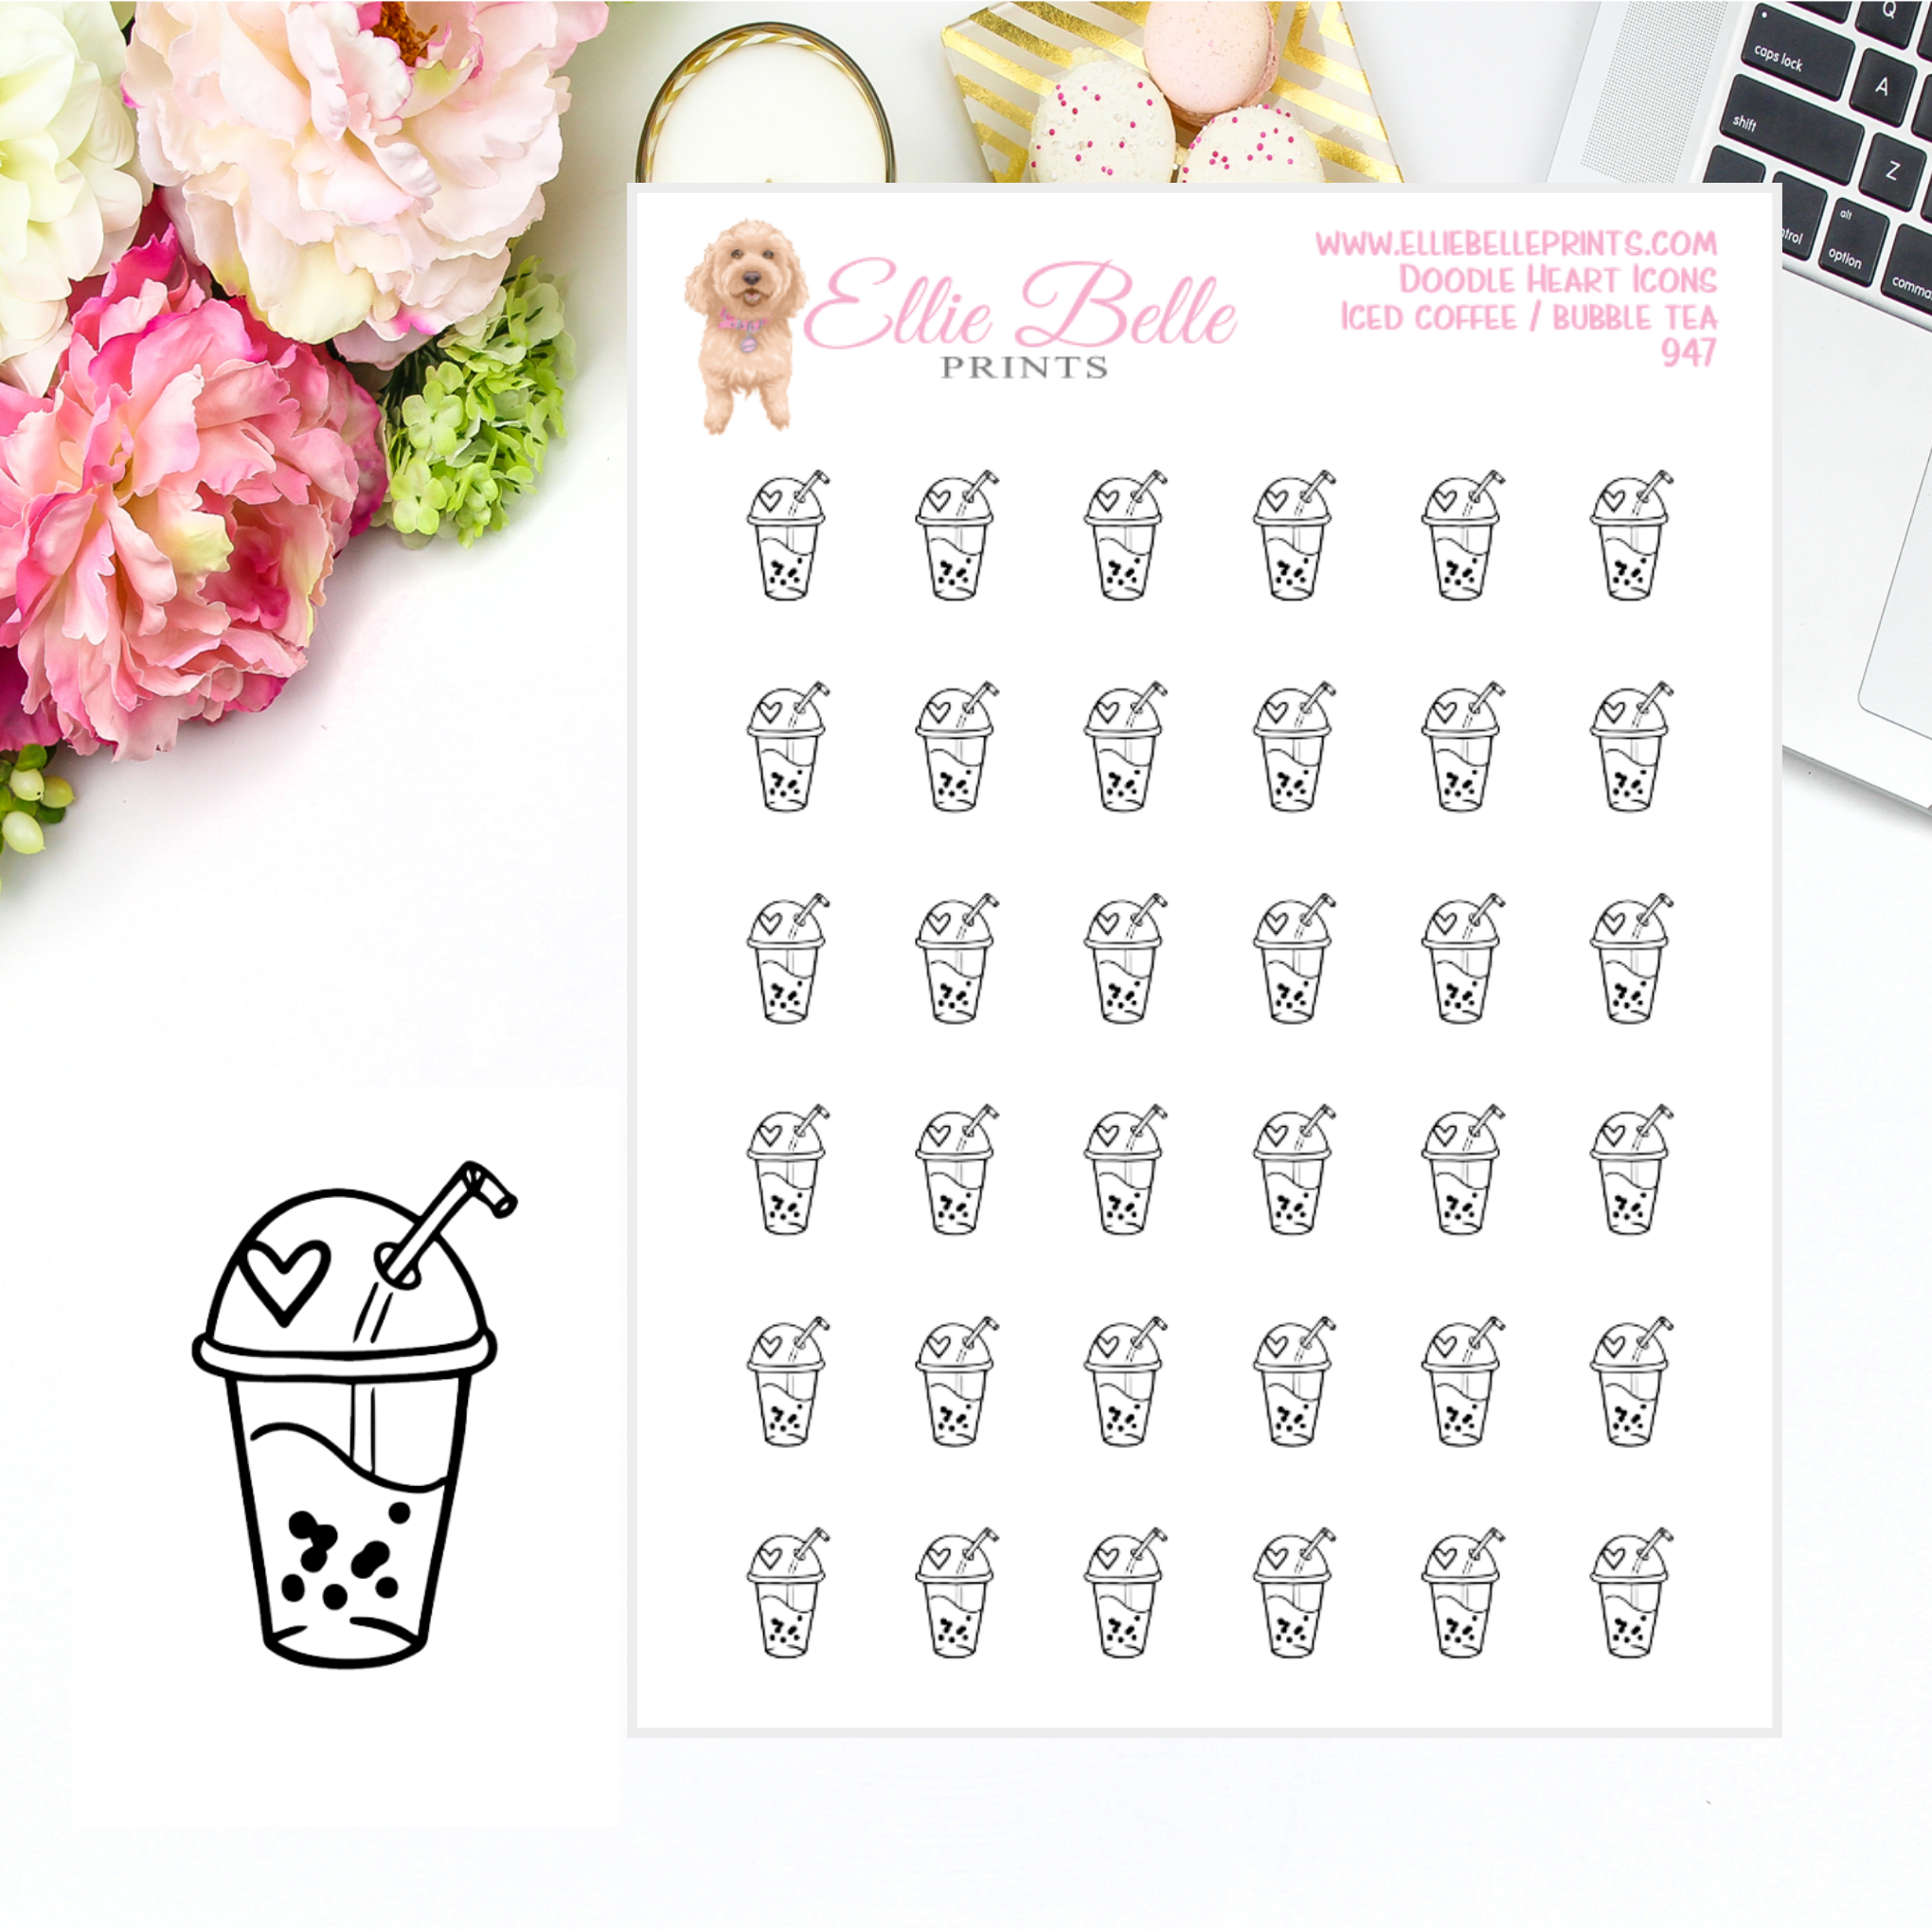 Iced Coffee / Bubble Tea - Doodle Heart Icons